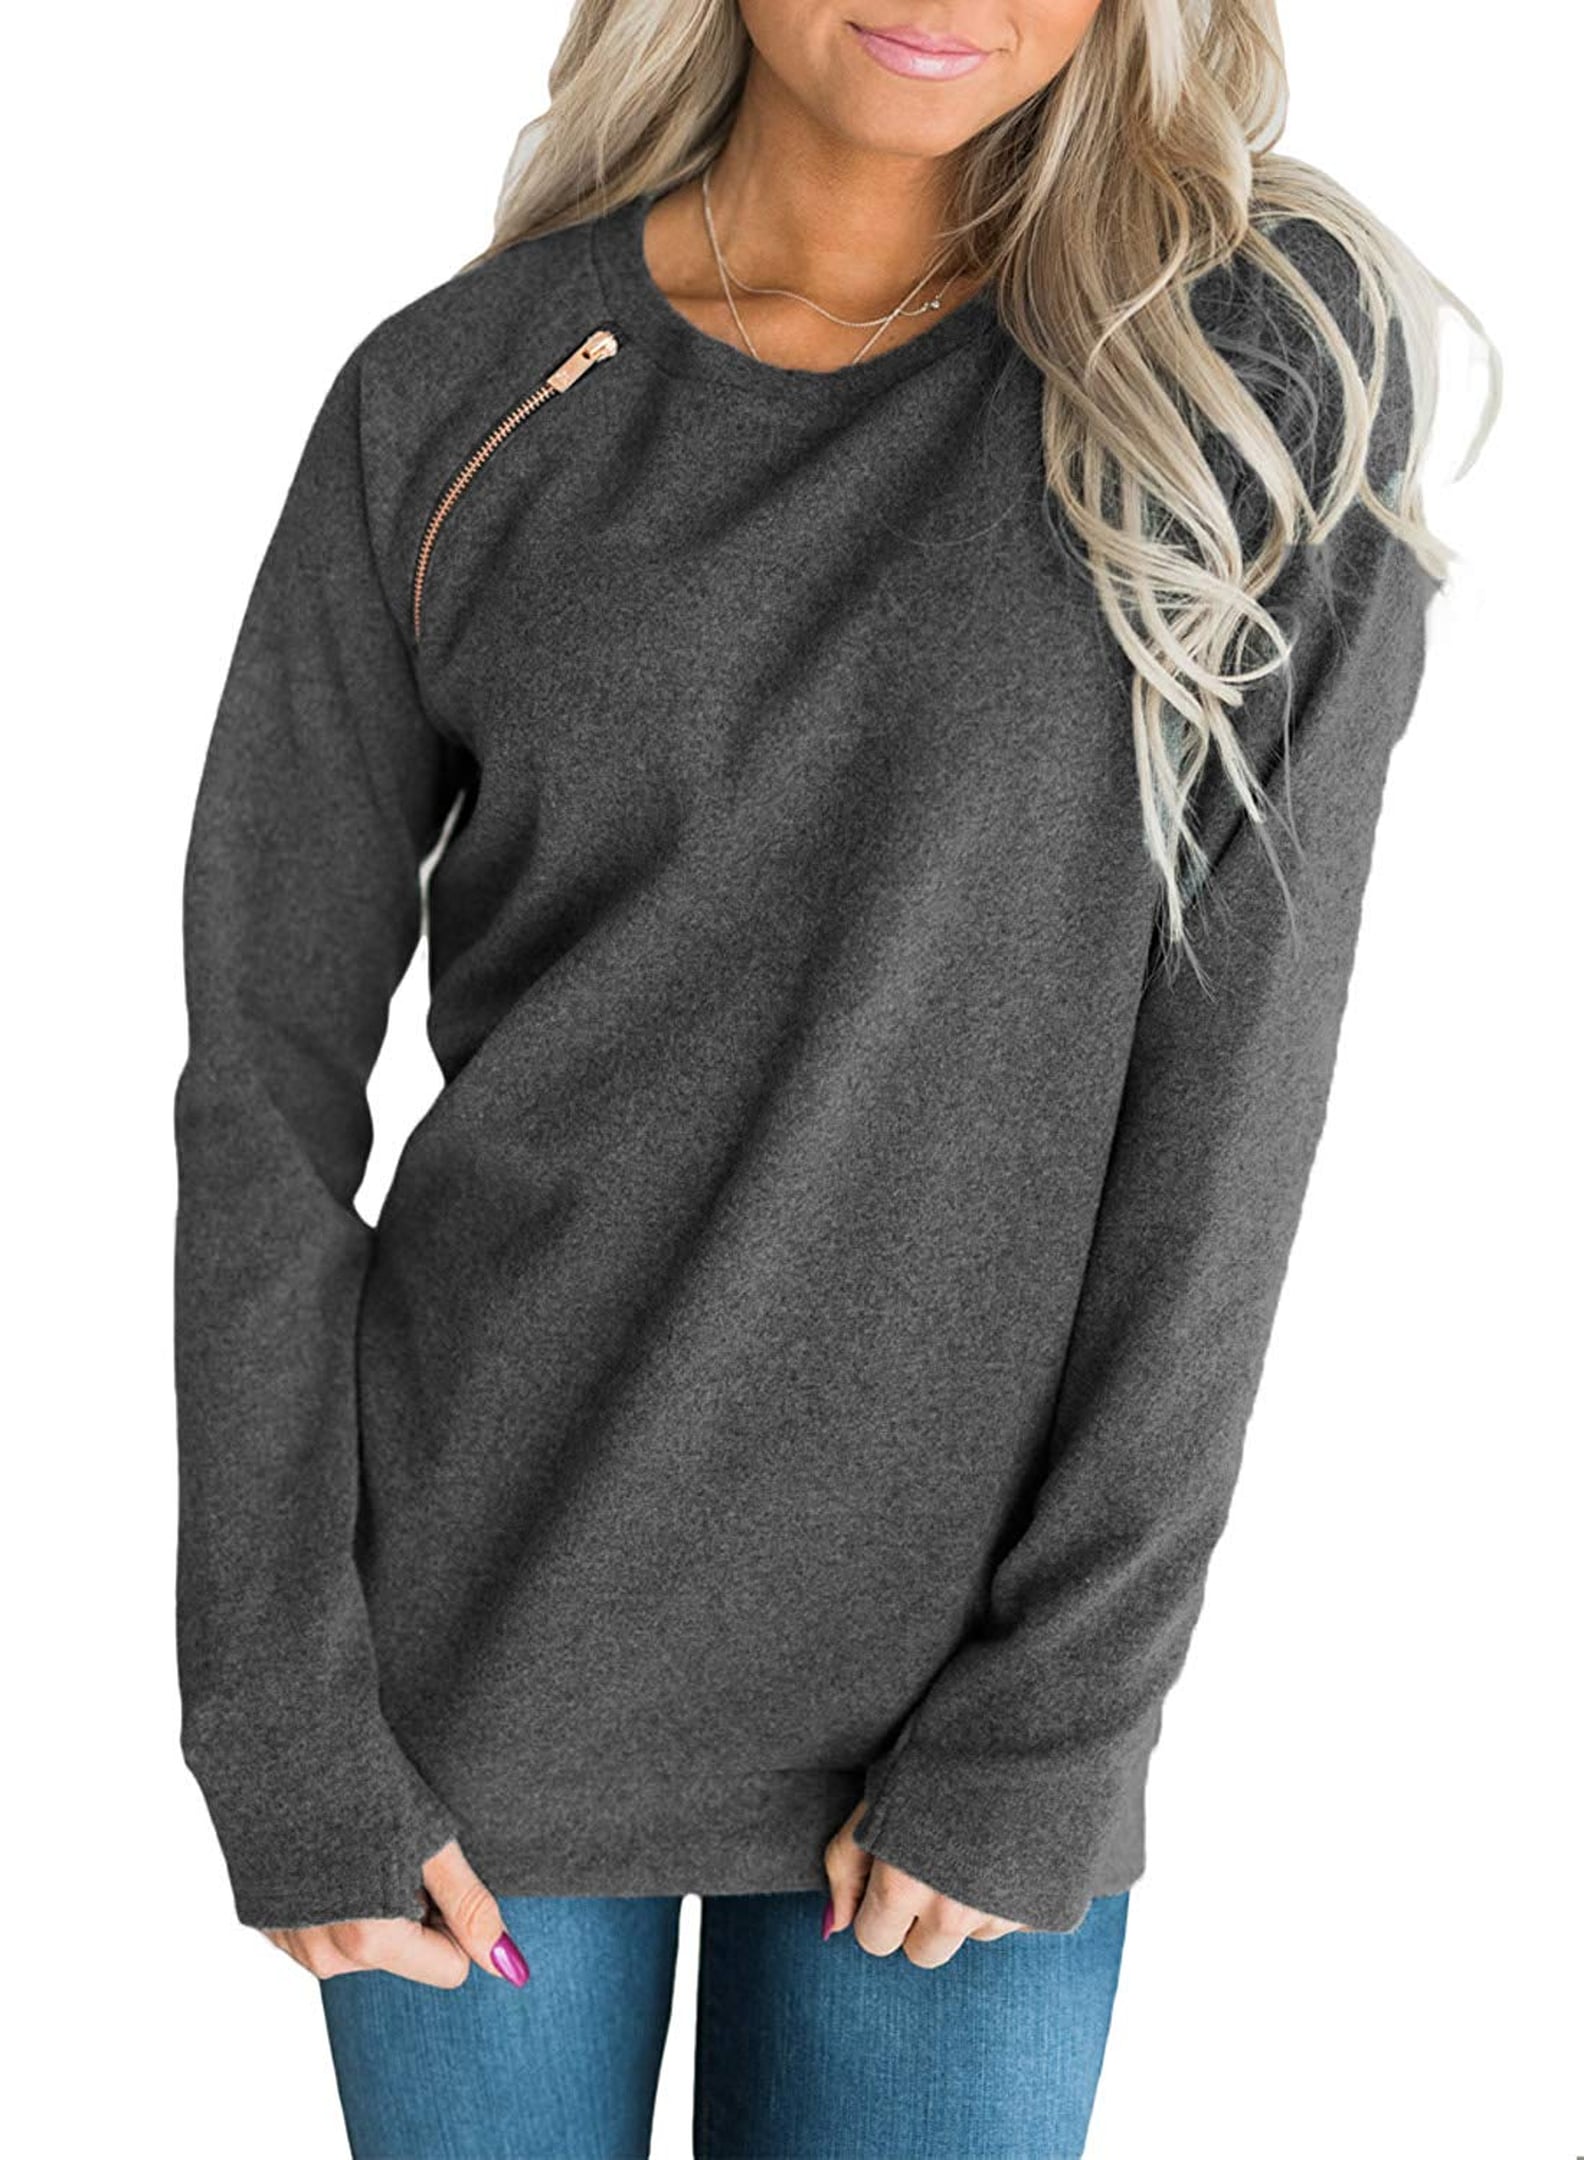 Stylish Sweatshirts on Amazon | POPSUGAR Fashion